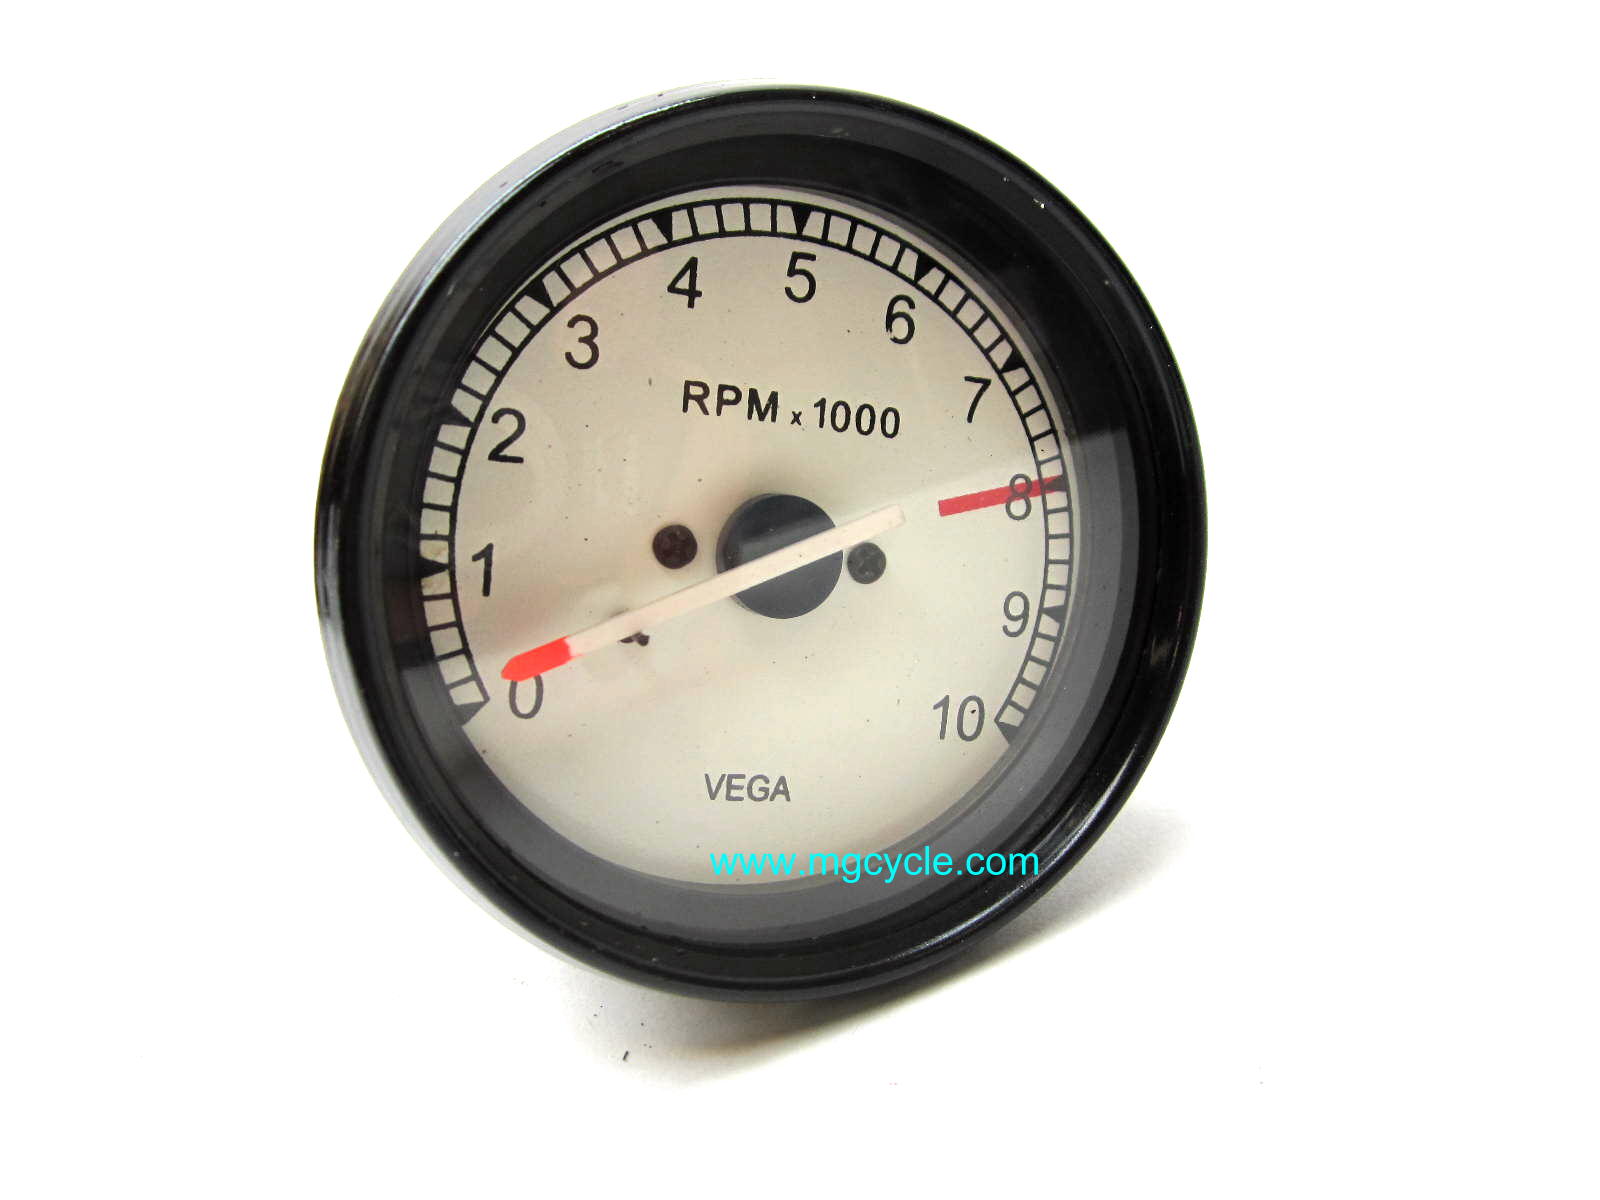 VEGA tachometer, 80mm, lighted